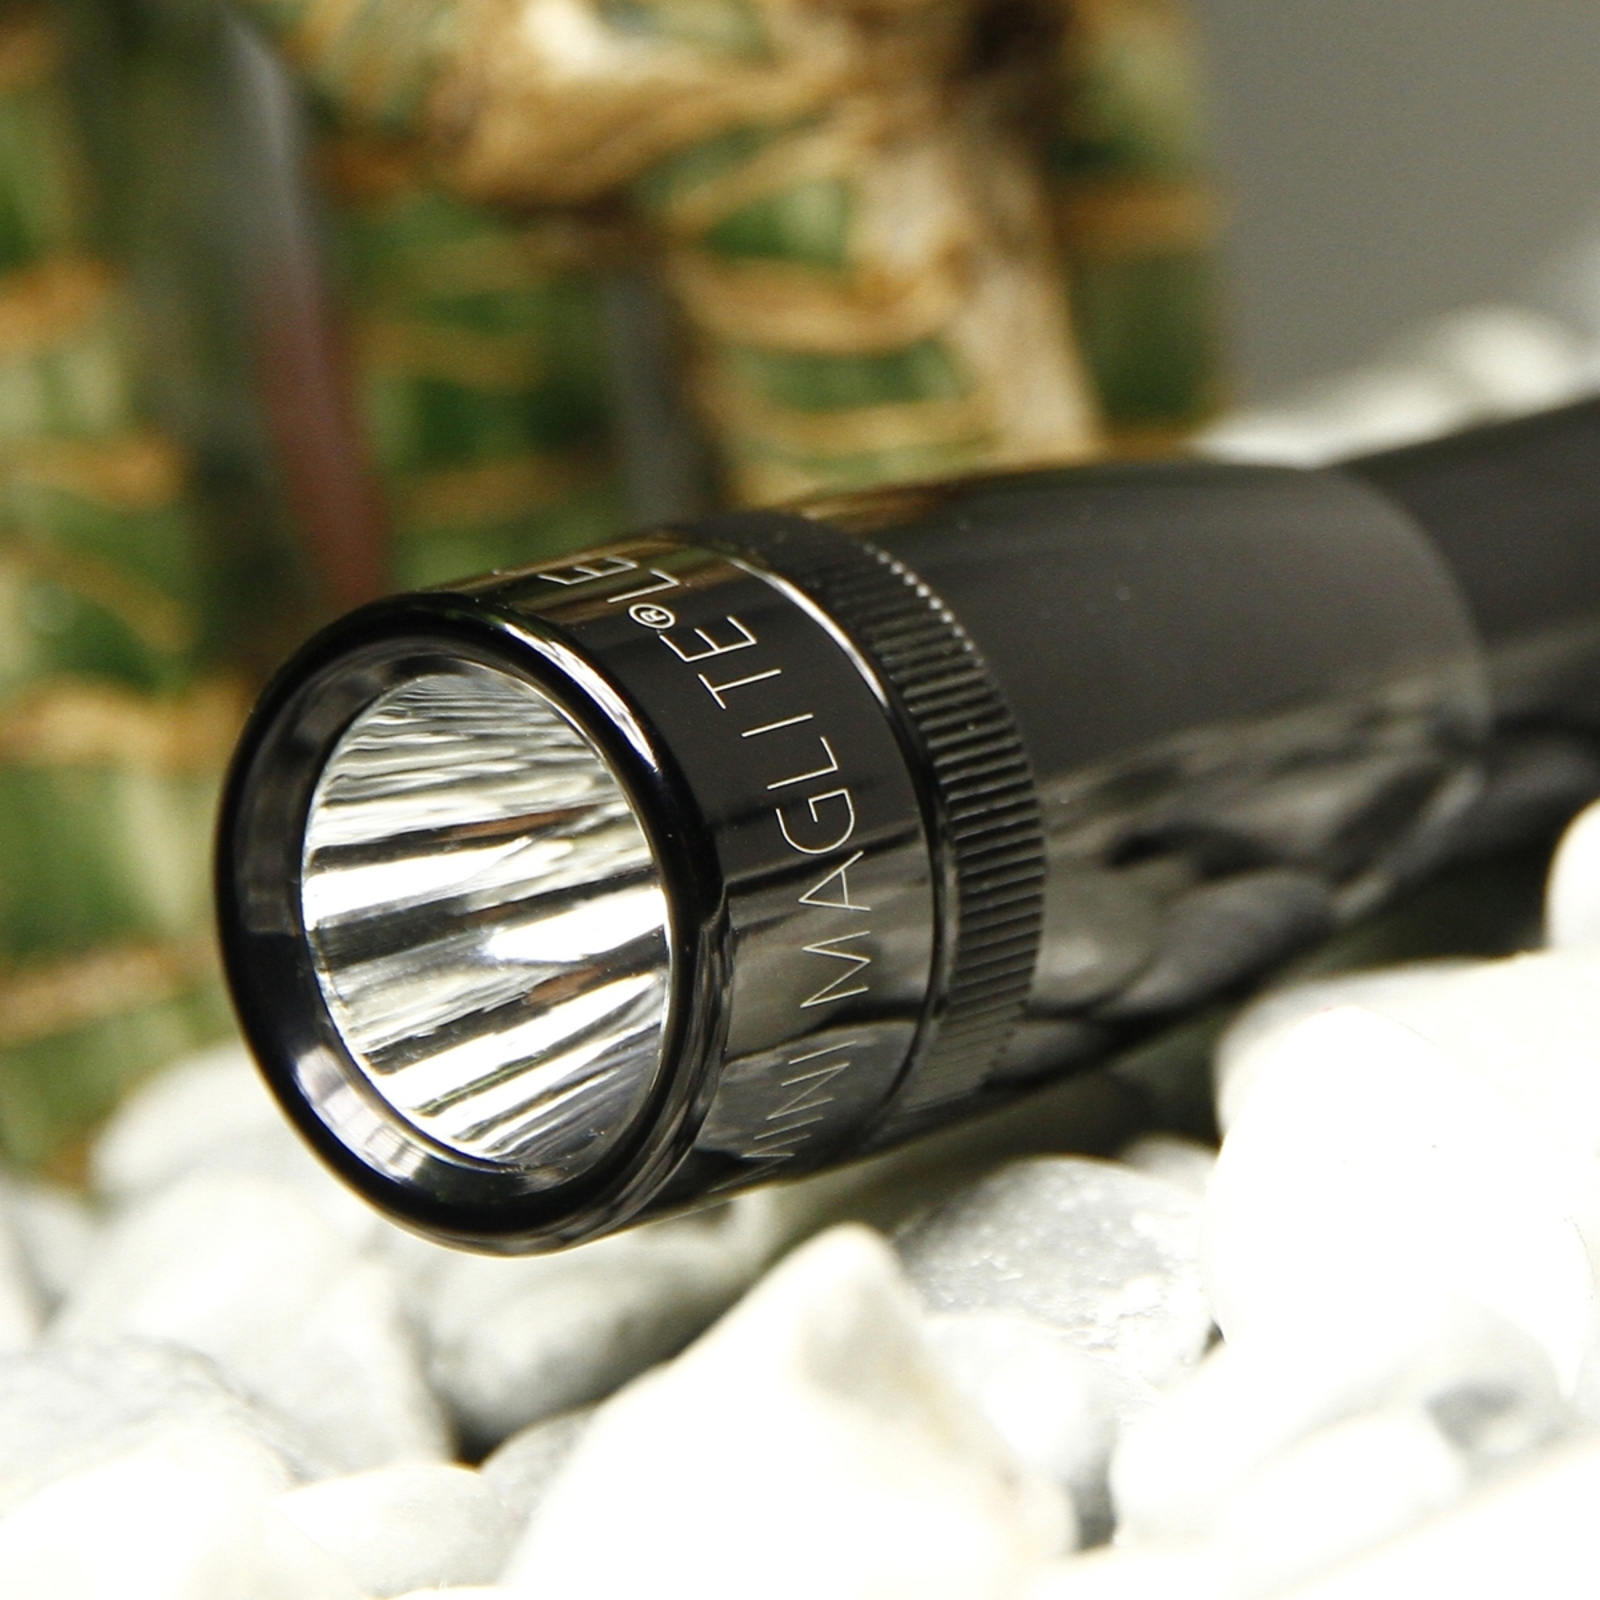 Maglite Mini lampe torche 2xAA avec étui (noir)